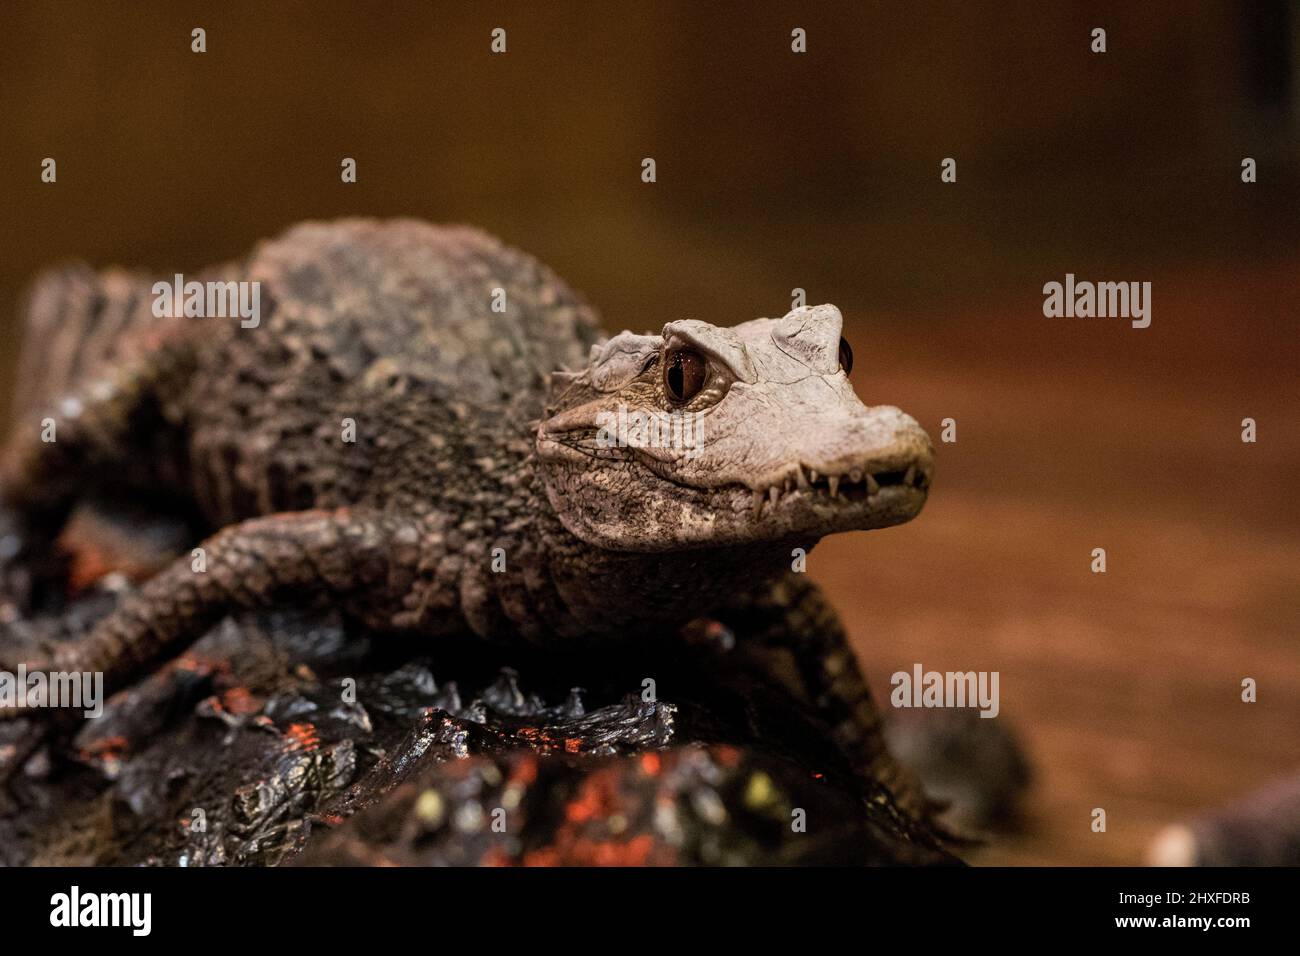 Caiman close up alligator head. Sharp teeth, eye and scales of caiman. Stock Photo